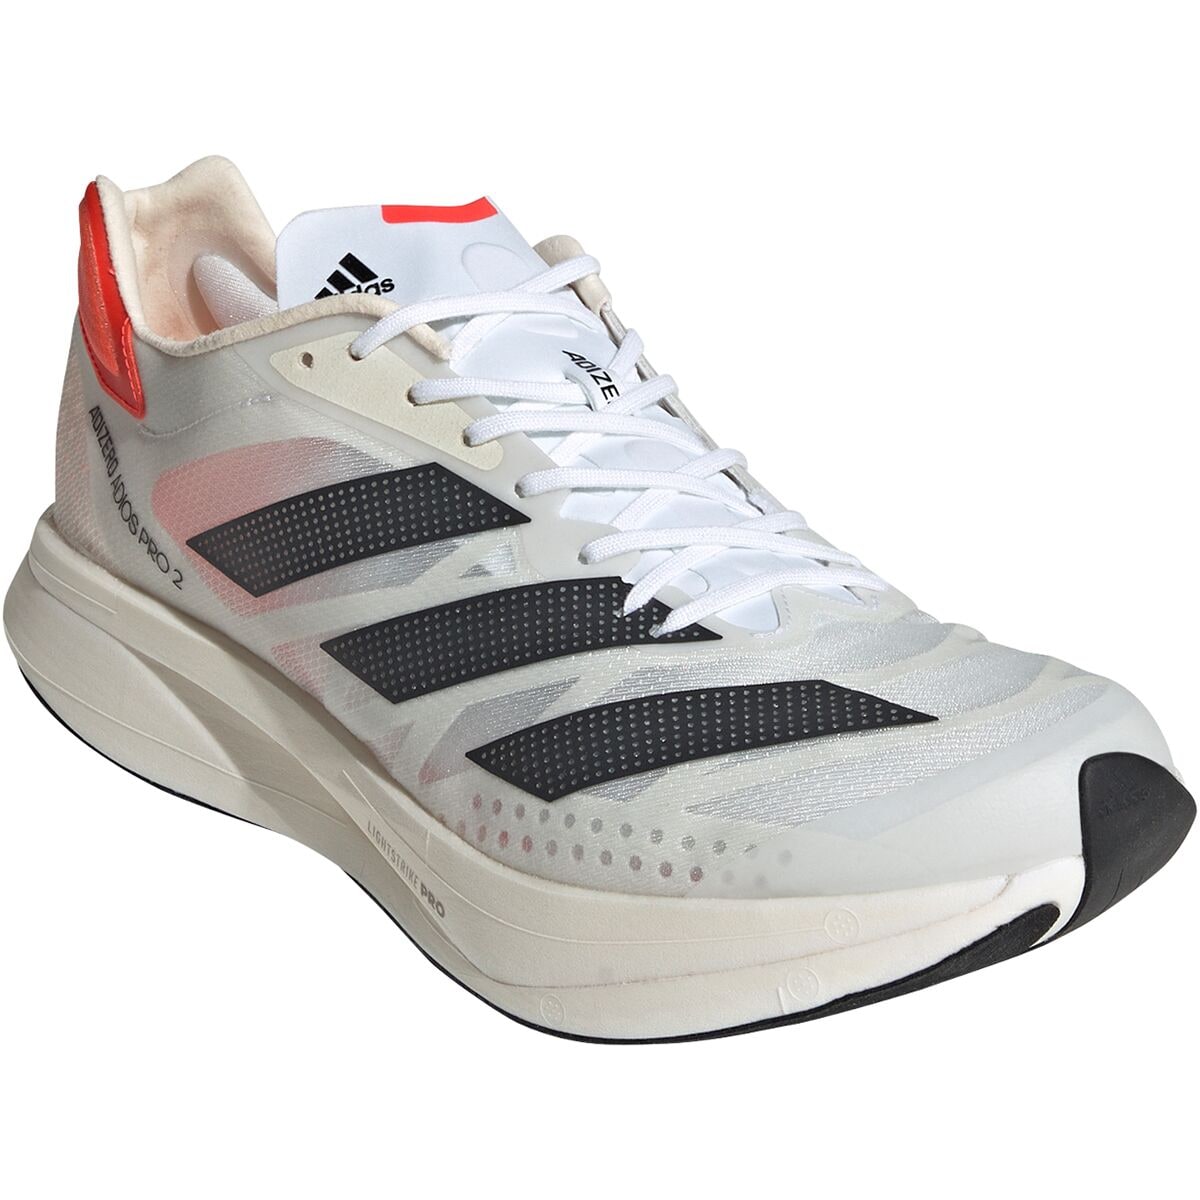 Adidas Adizero Adios Pro 2 Running Shoe - Men's - Men